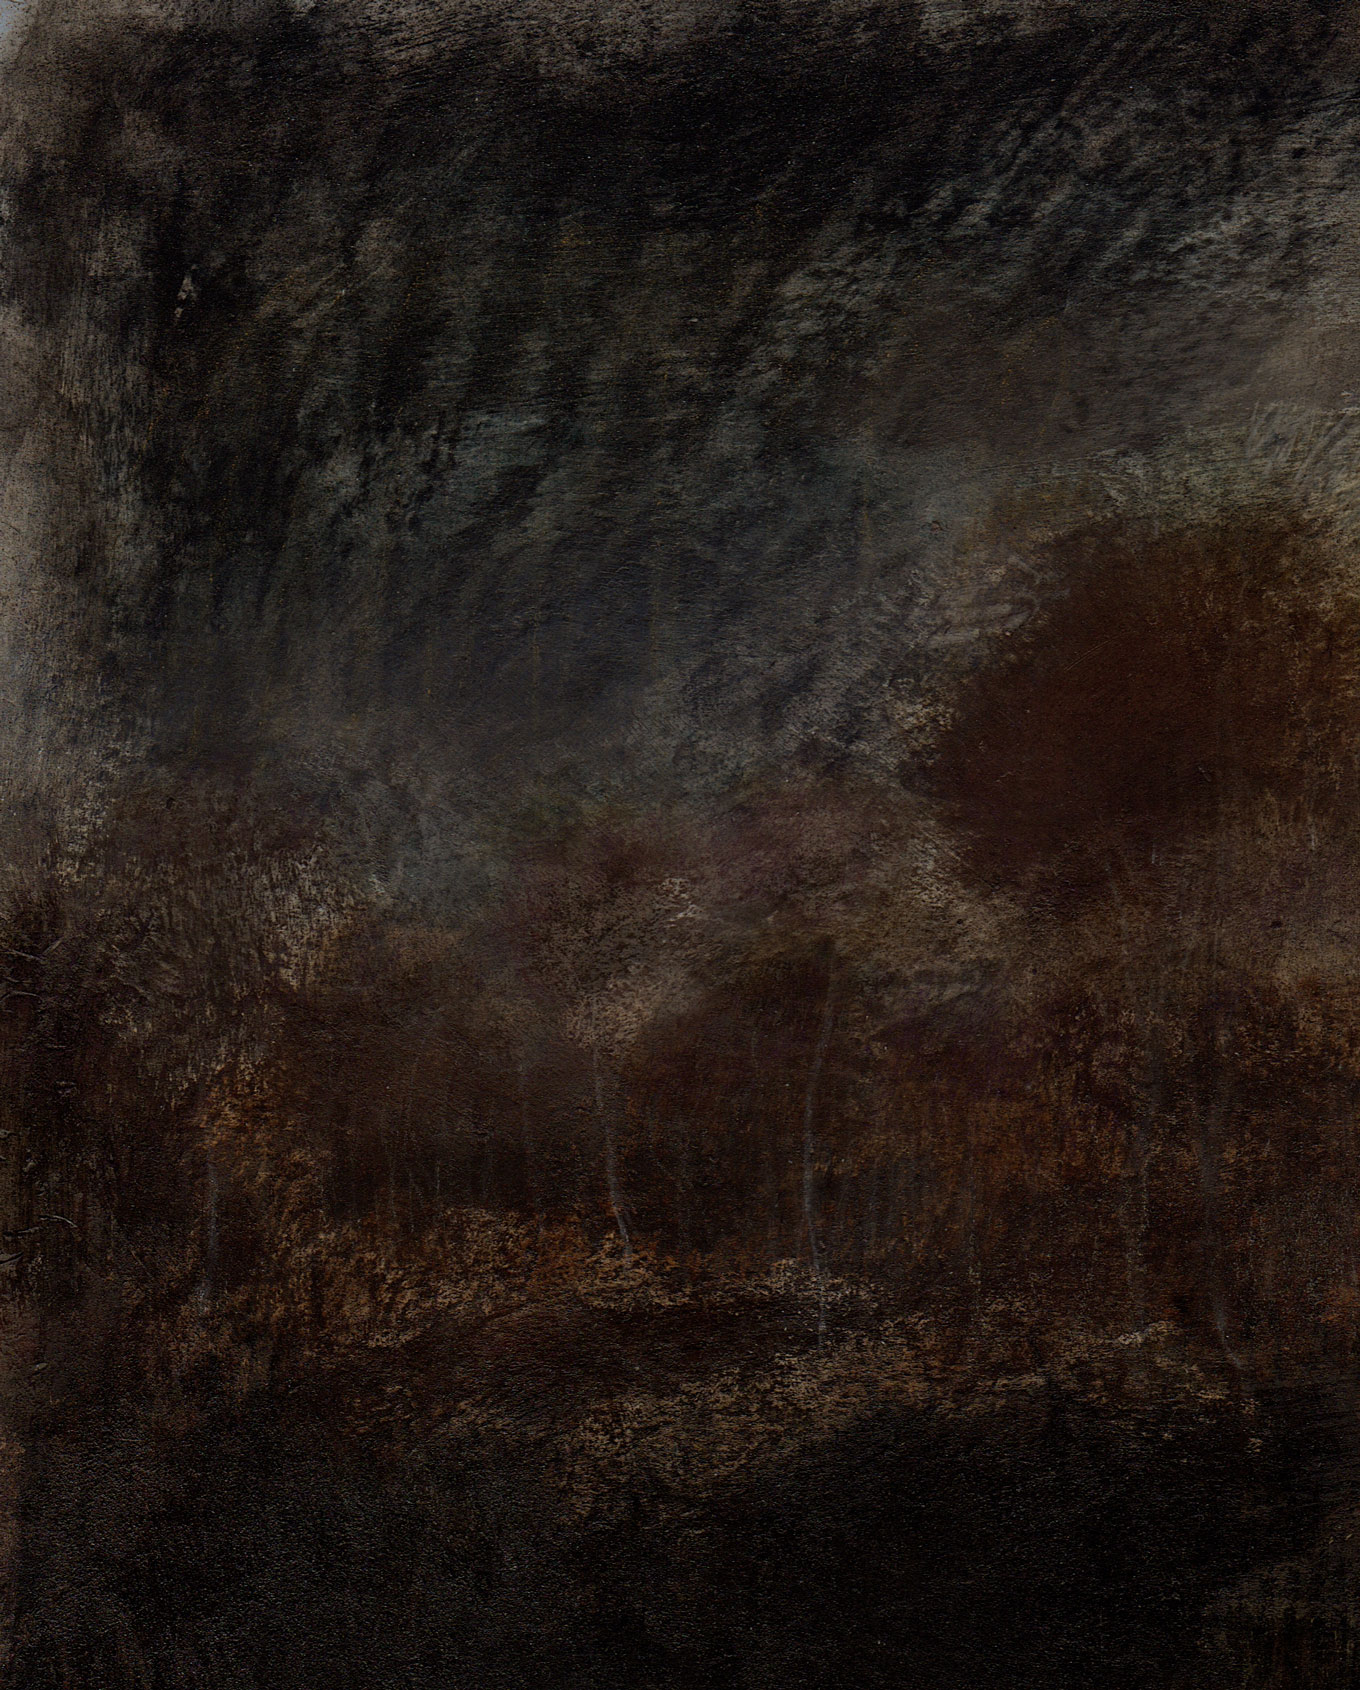 L1199 - Nicholas Herbert, British Artist, mixed media landscape painting of Chobham Common, mixed media on paper,2020